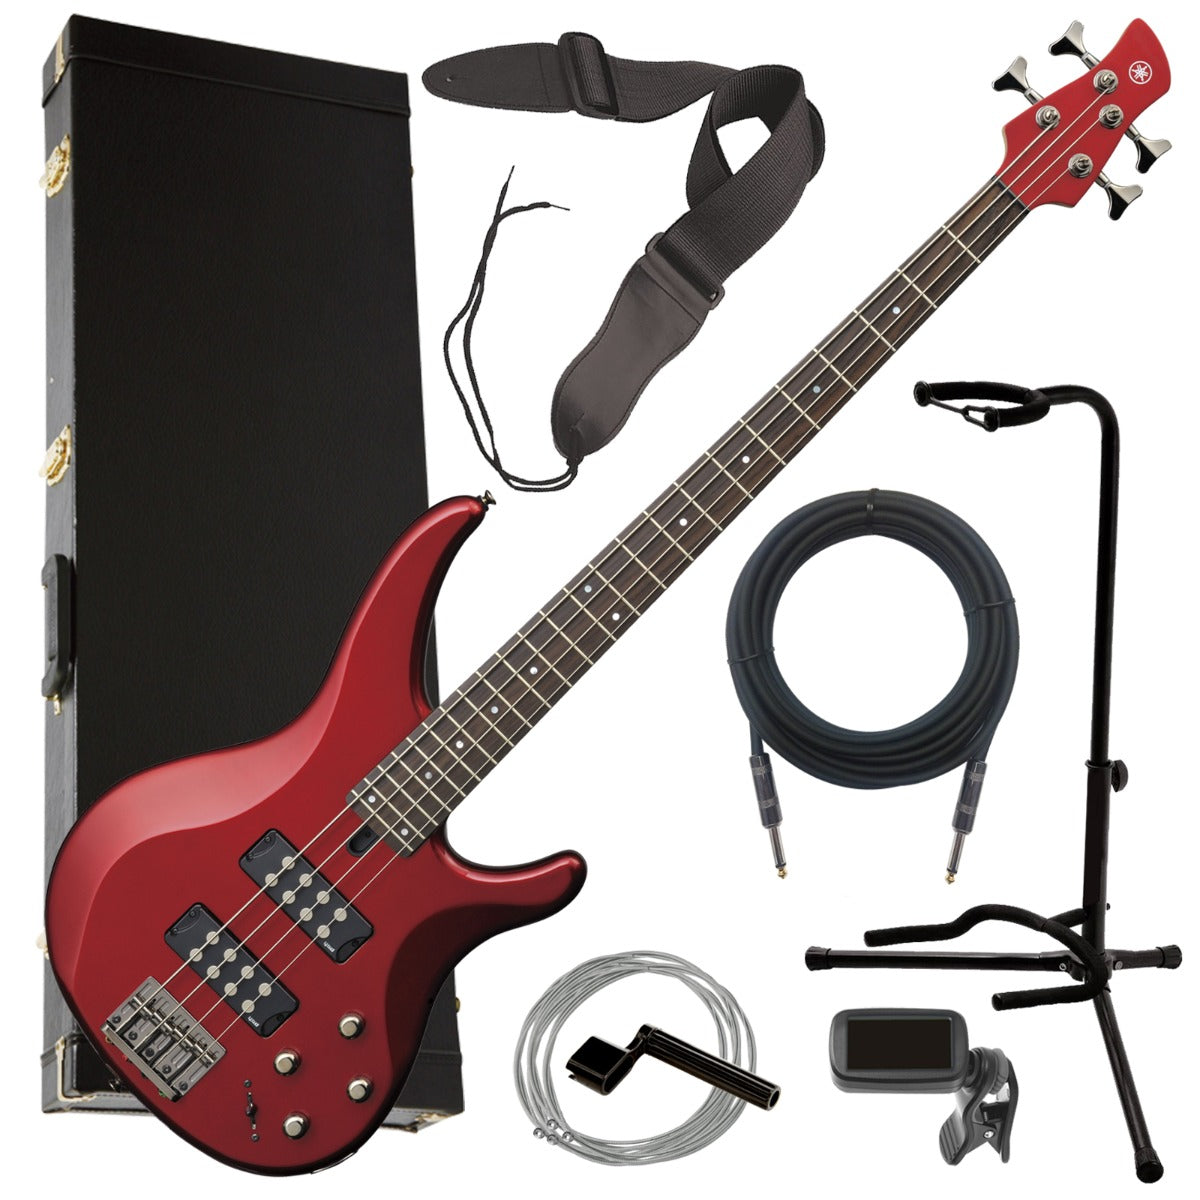 Yamaha TRBX304 4-String Bass Guitar - Candy Apple Red COMPLETE BASS BUNDLE